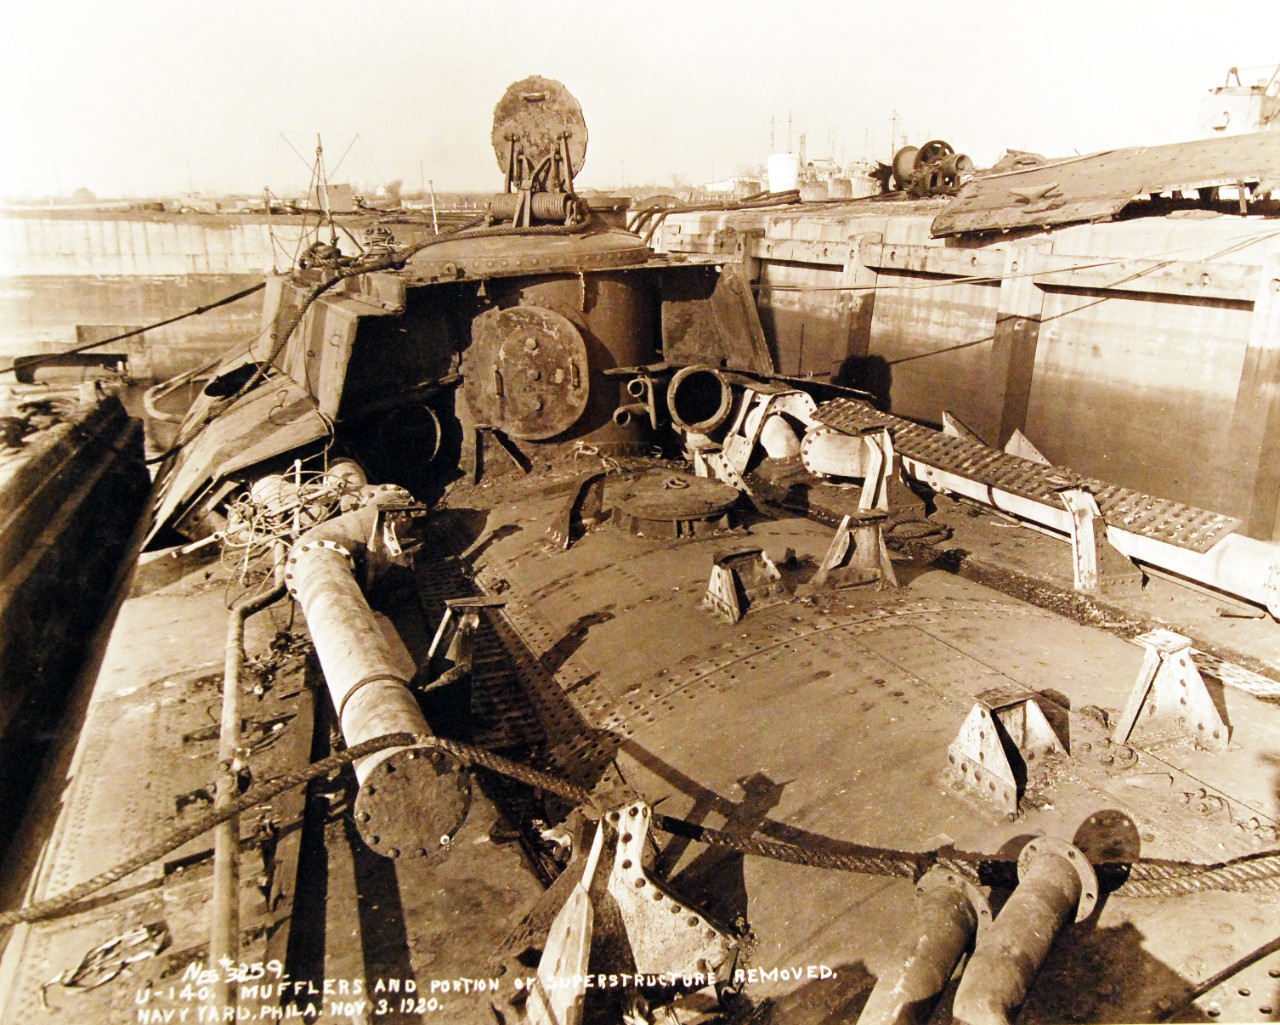 <p>19-N-3859: German submarine, U-140, mufflers and portion of superstructure removed at Philadelphia Navy Yard, Philadelphia, Pennsylvania, November 3, 1920.&nbsp;</p>
